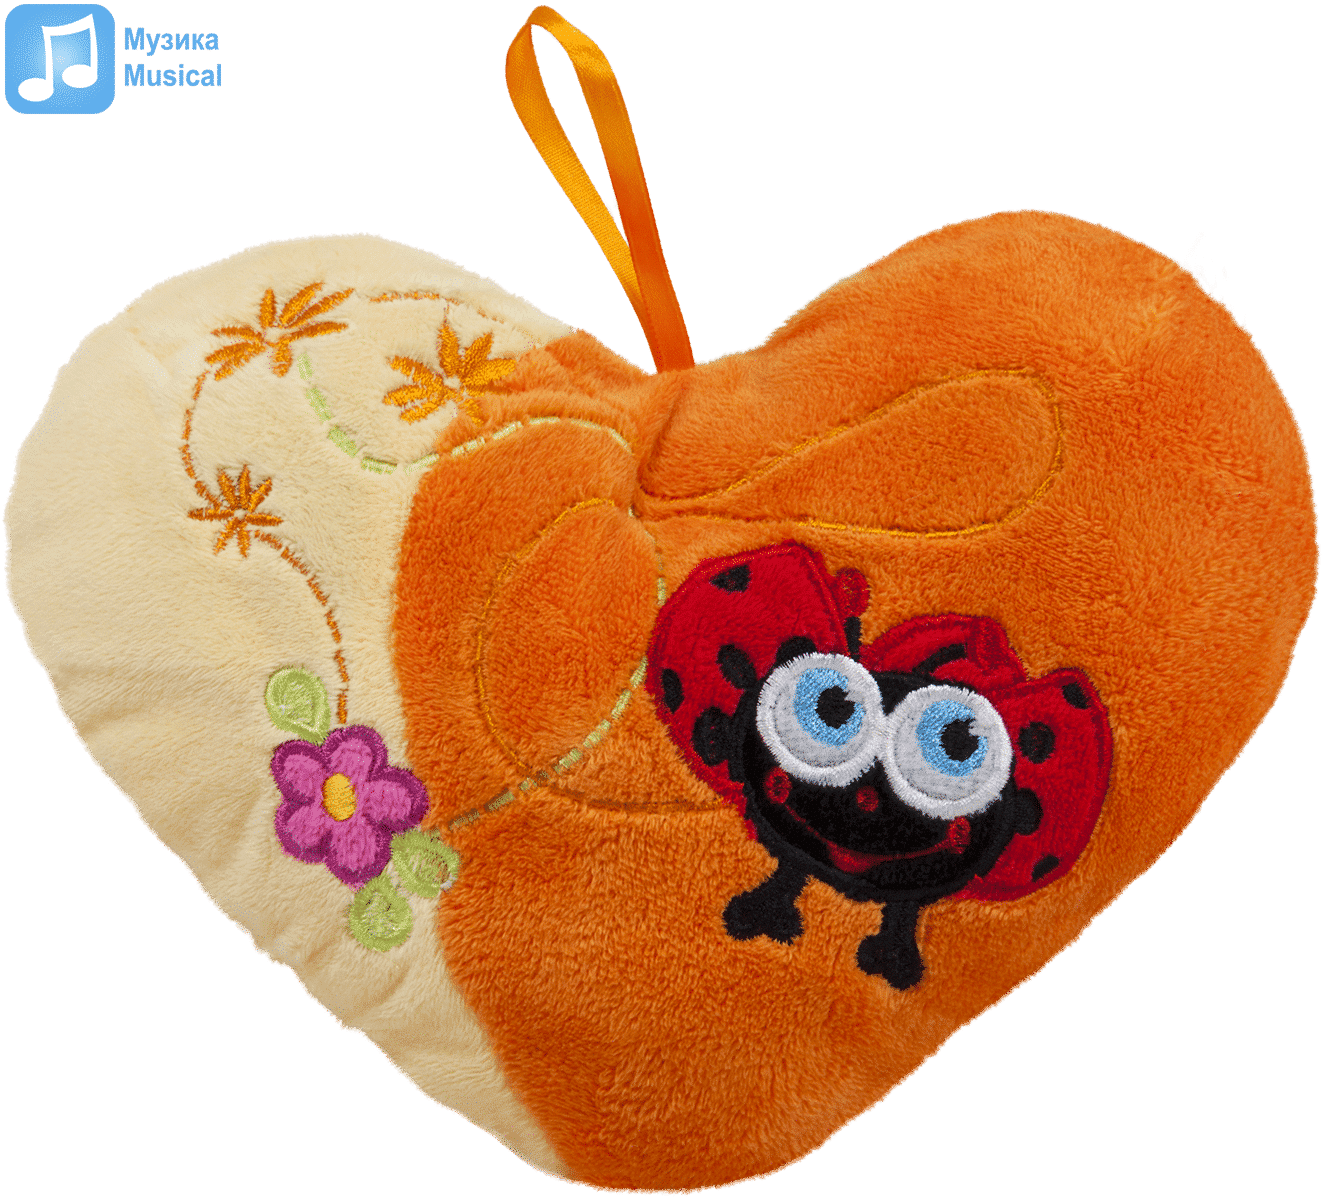 Heart with a ladybug